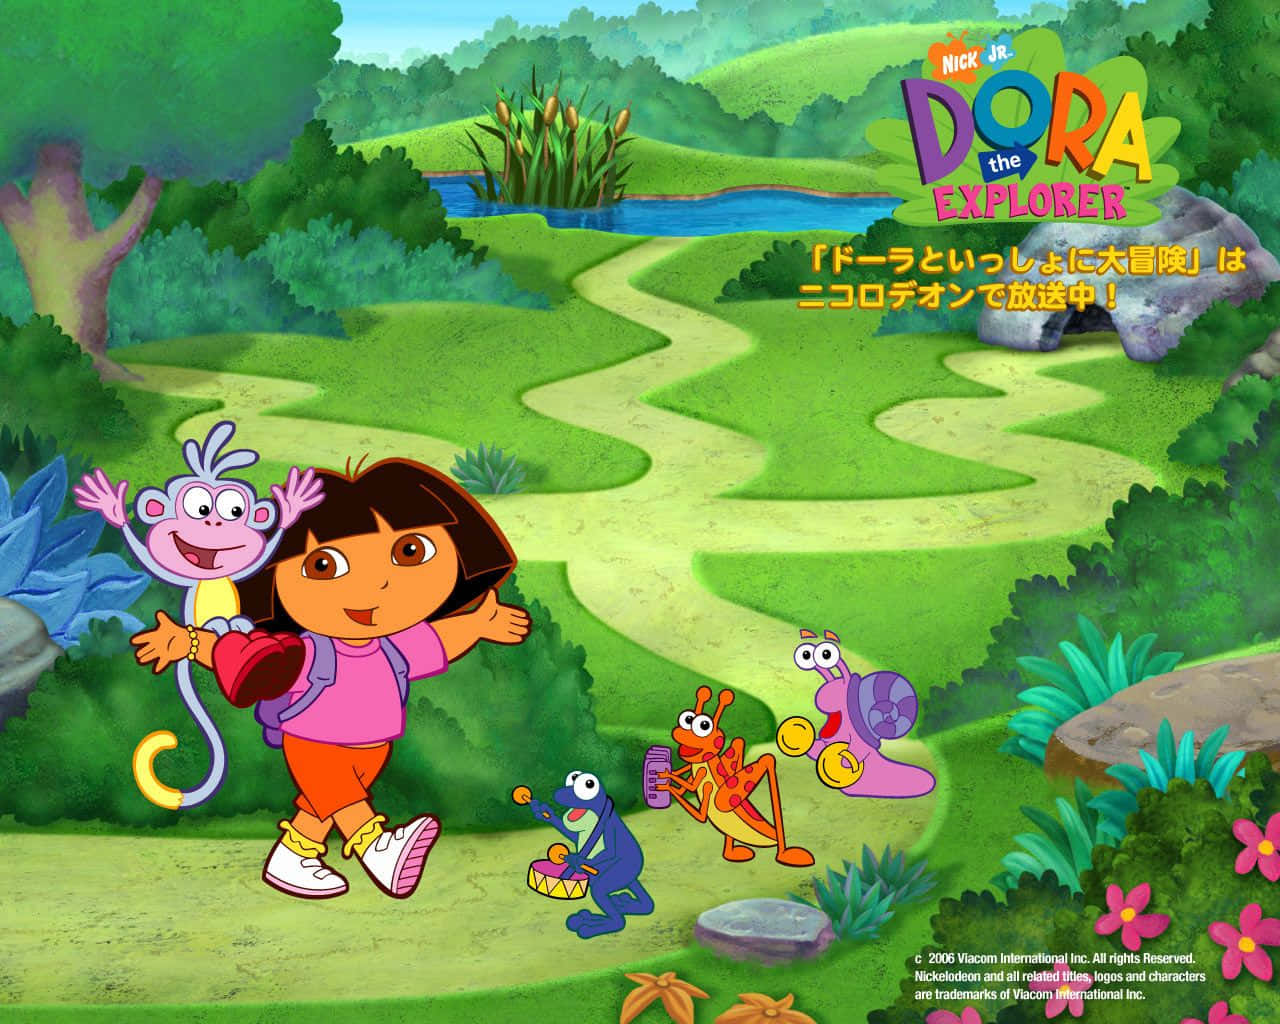 Dora,a Exploradora, Pronta Para Explorar Novas Aventuras